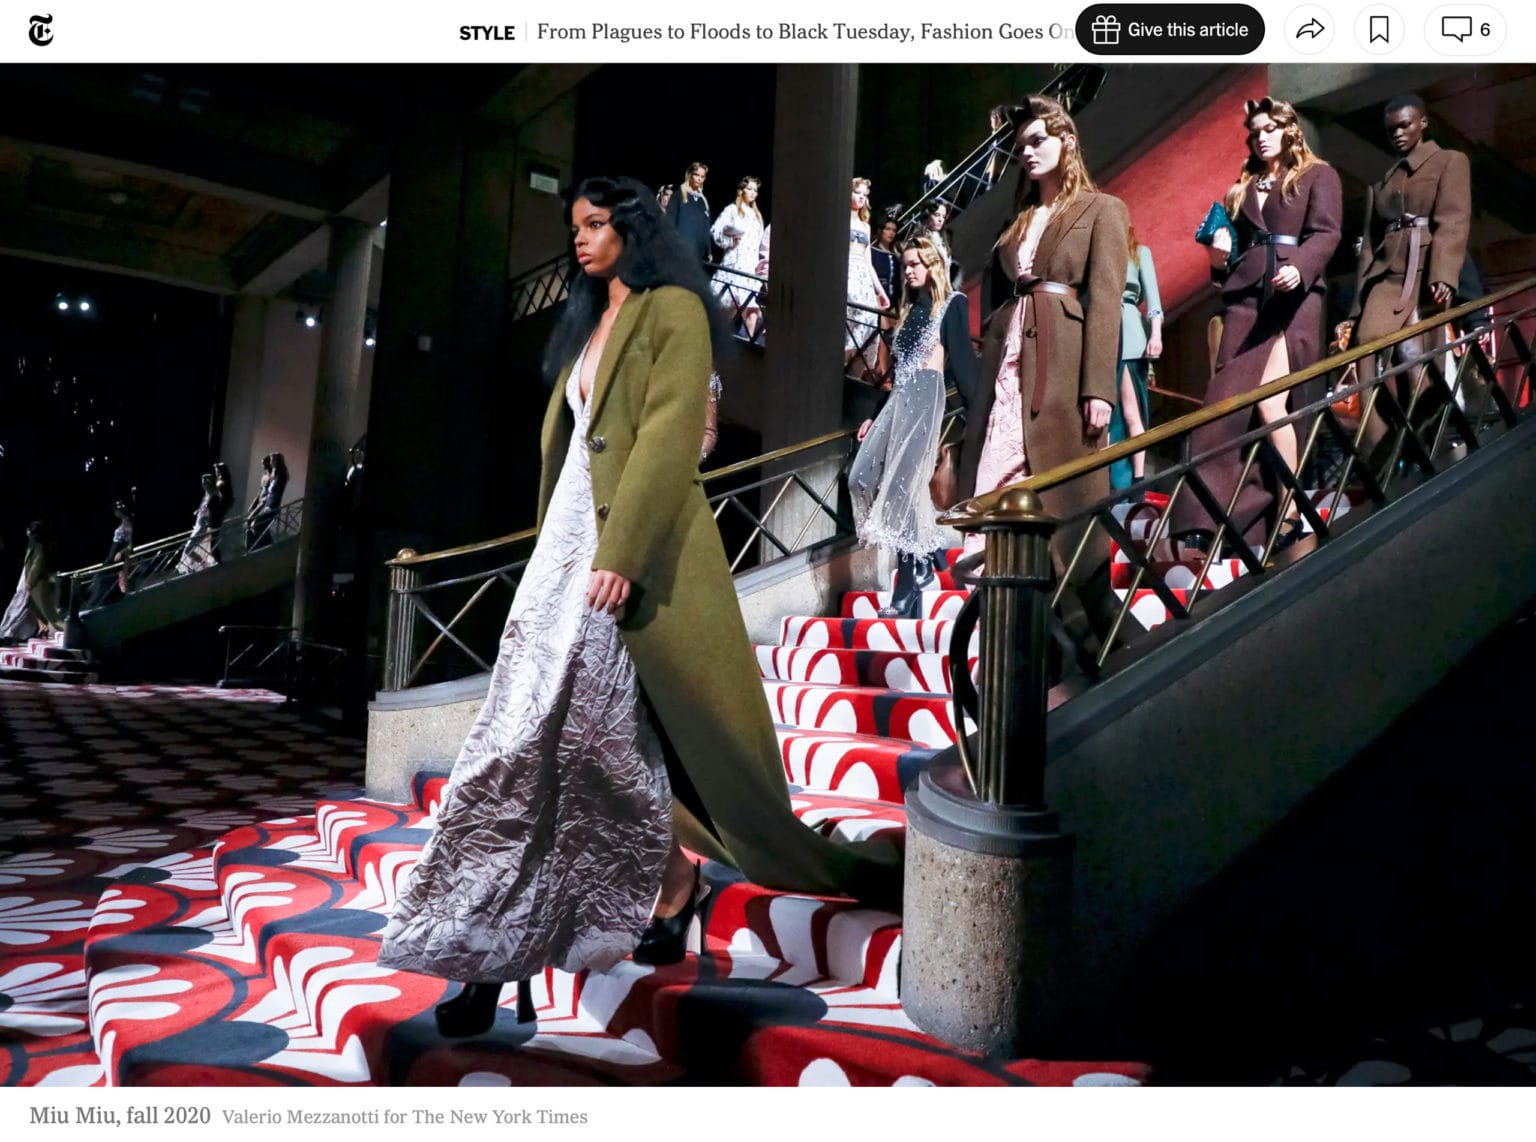 Miu Miu Fashion Show, Photo by Valerio Mezzanotti for The New York Times